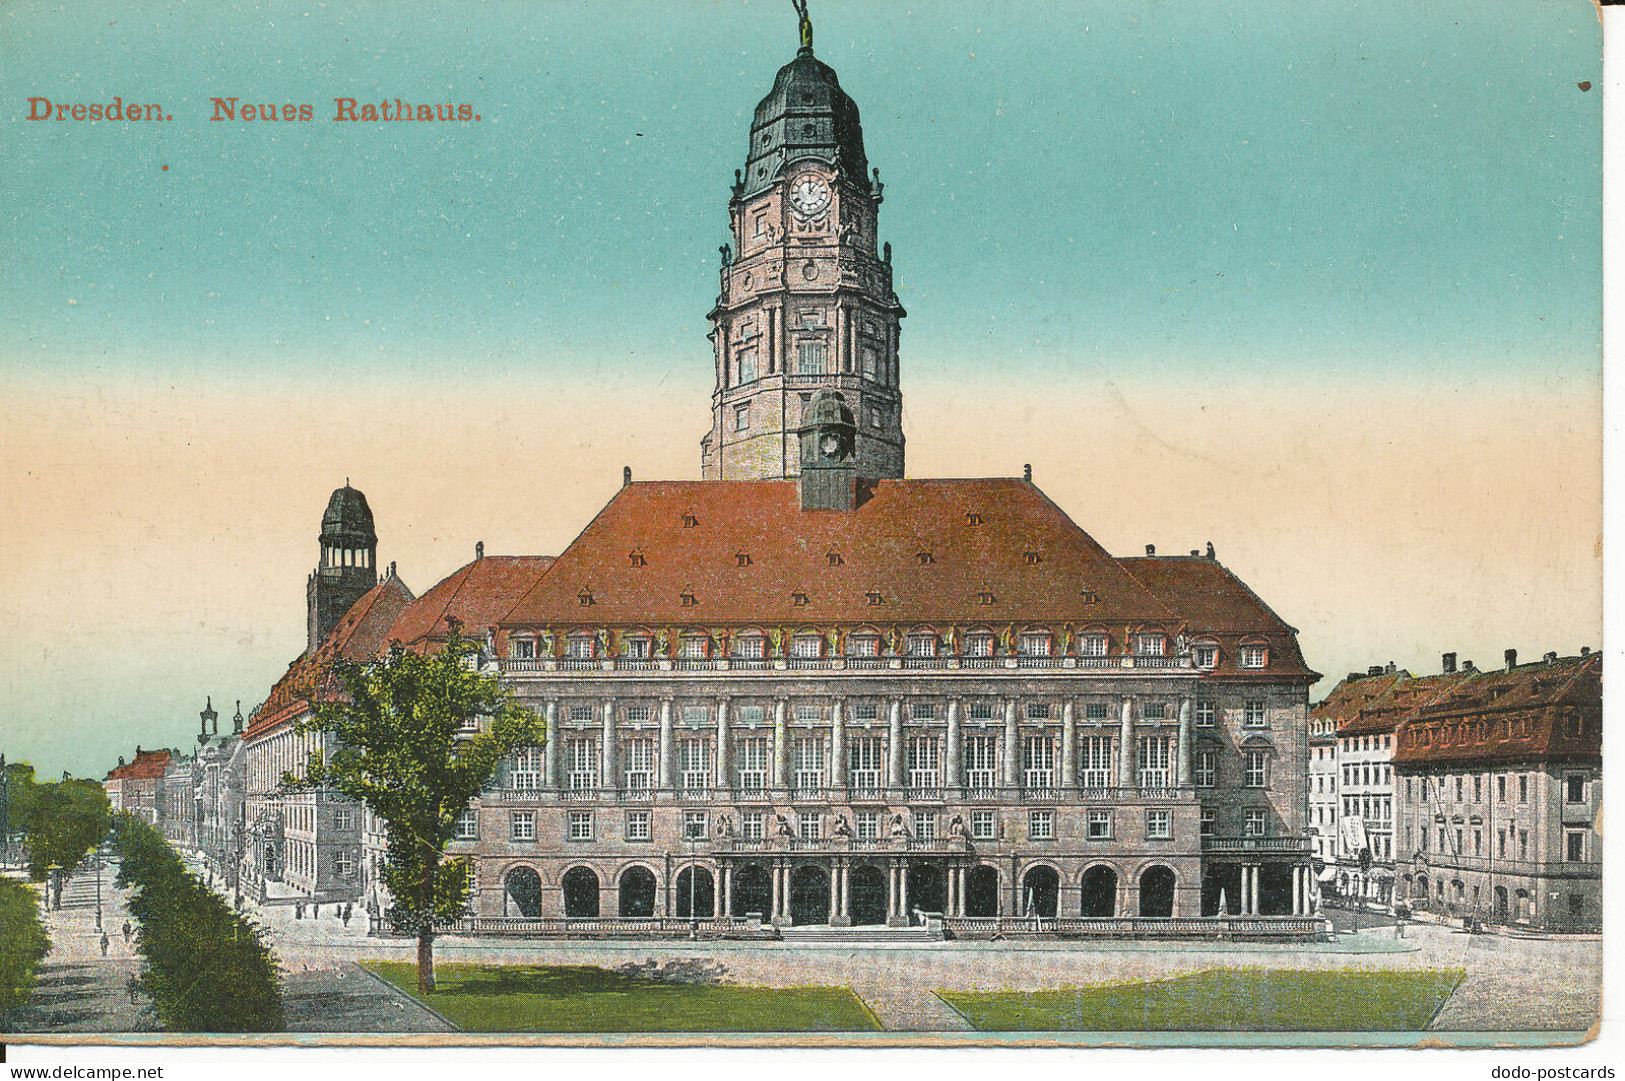 PC38517 Dresden. Neues Rathaus. B. Hopkins - World